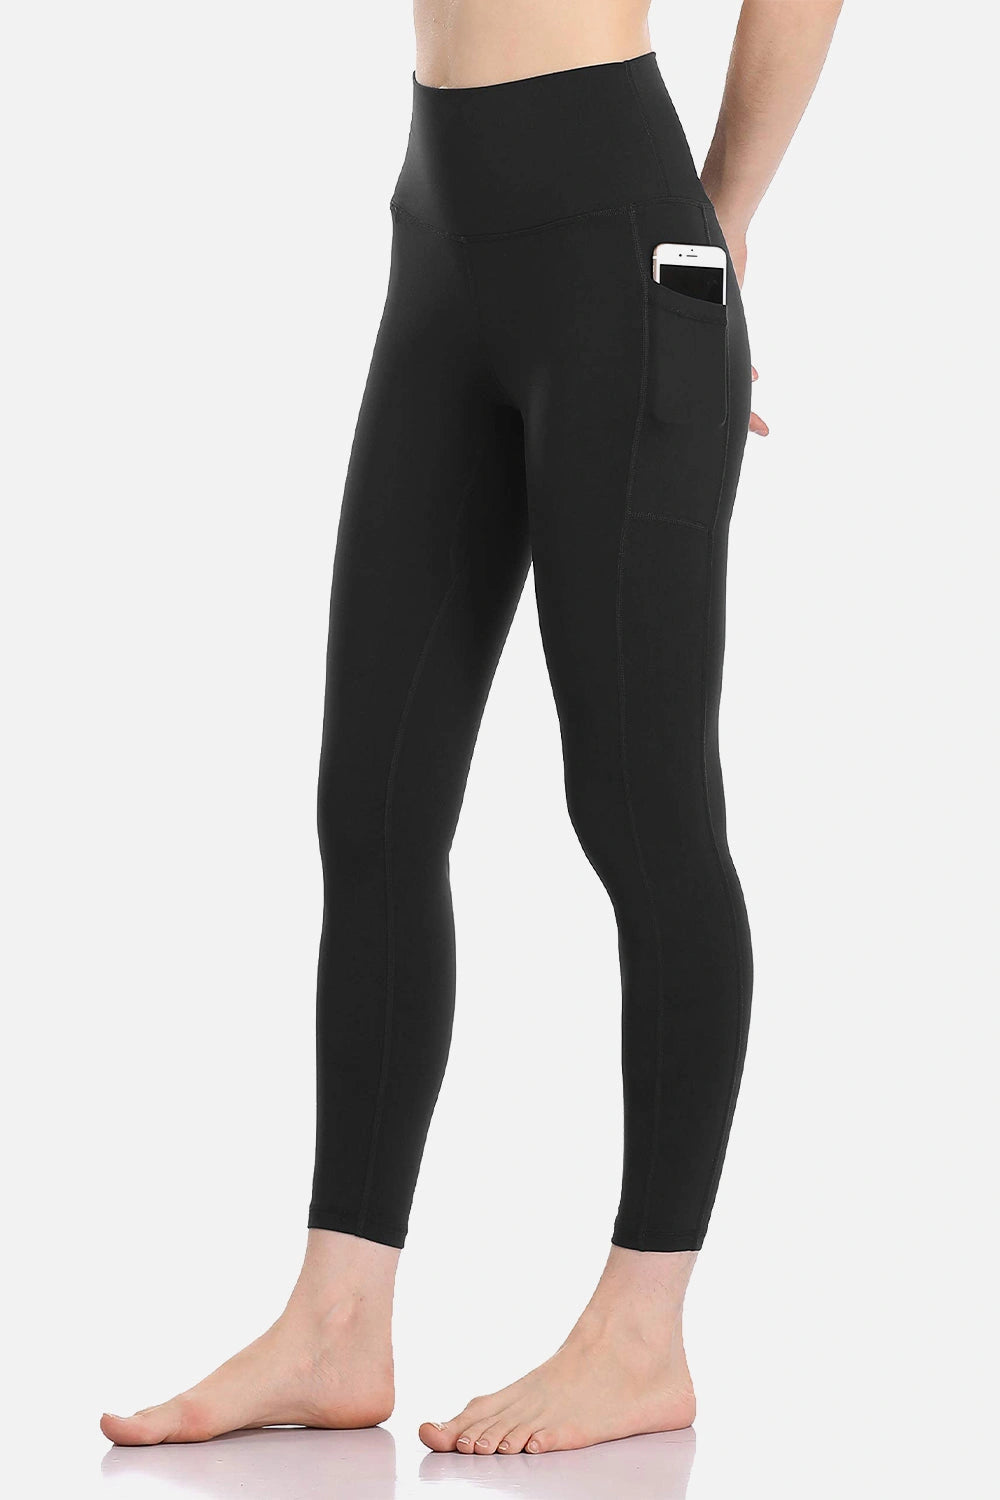 Spalding Women's Activewear Cotton Blend 25.5 Inseam Legging with Pockets